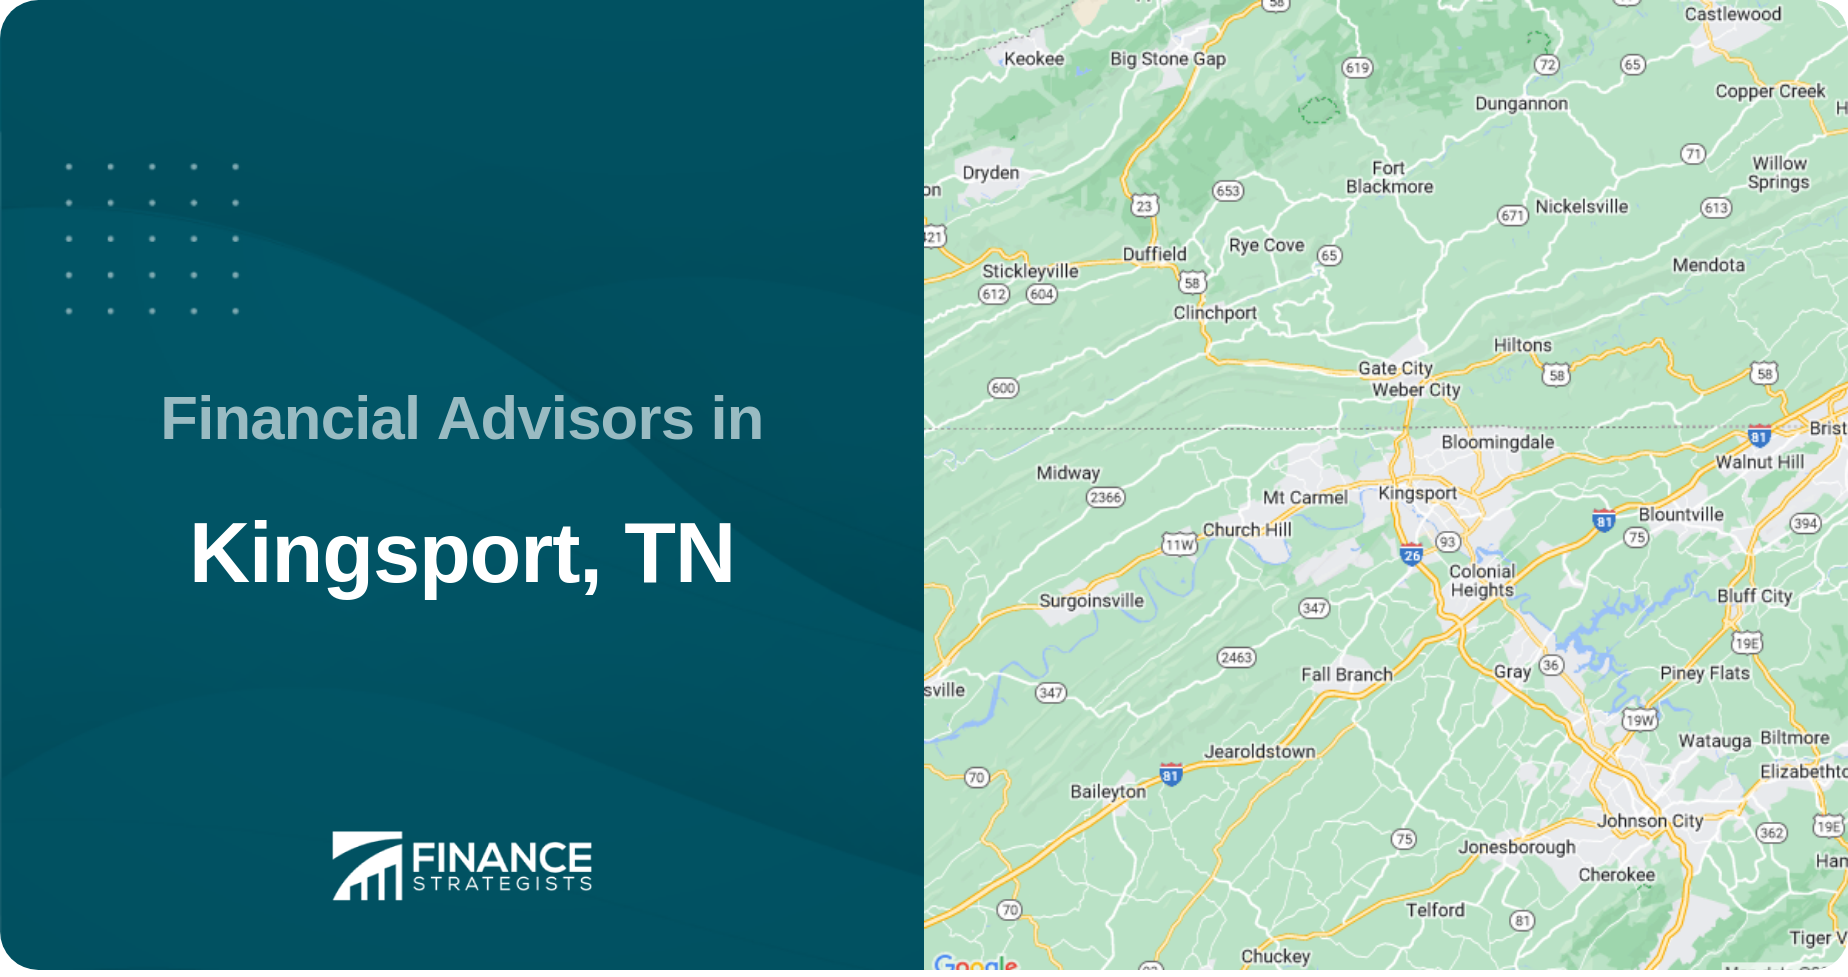 Financial Advisors in Kingsport, TN